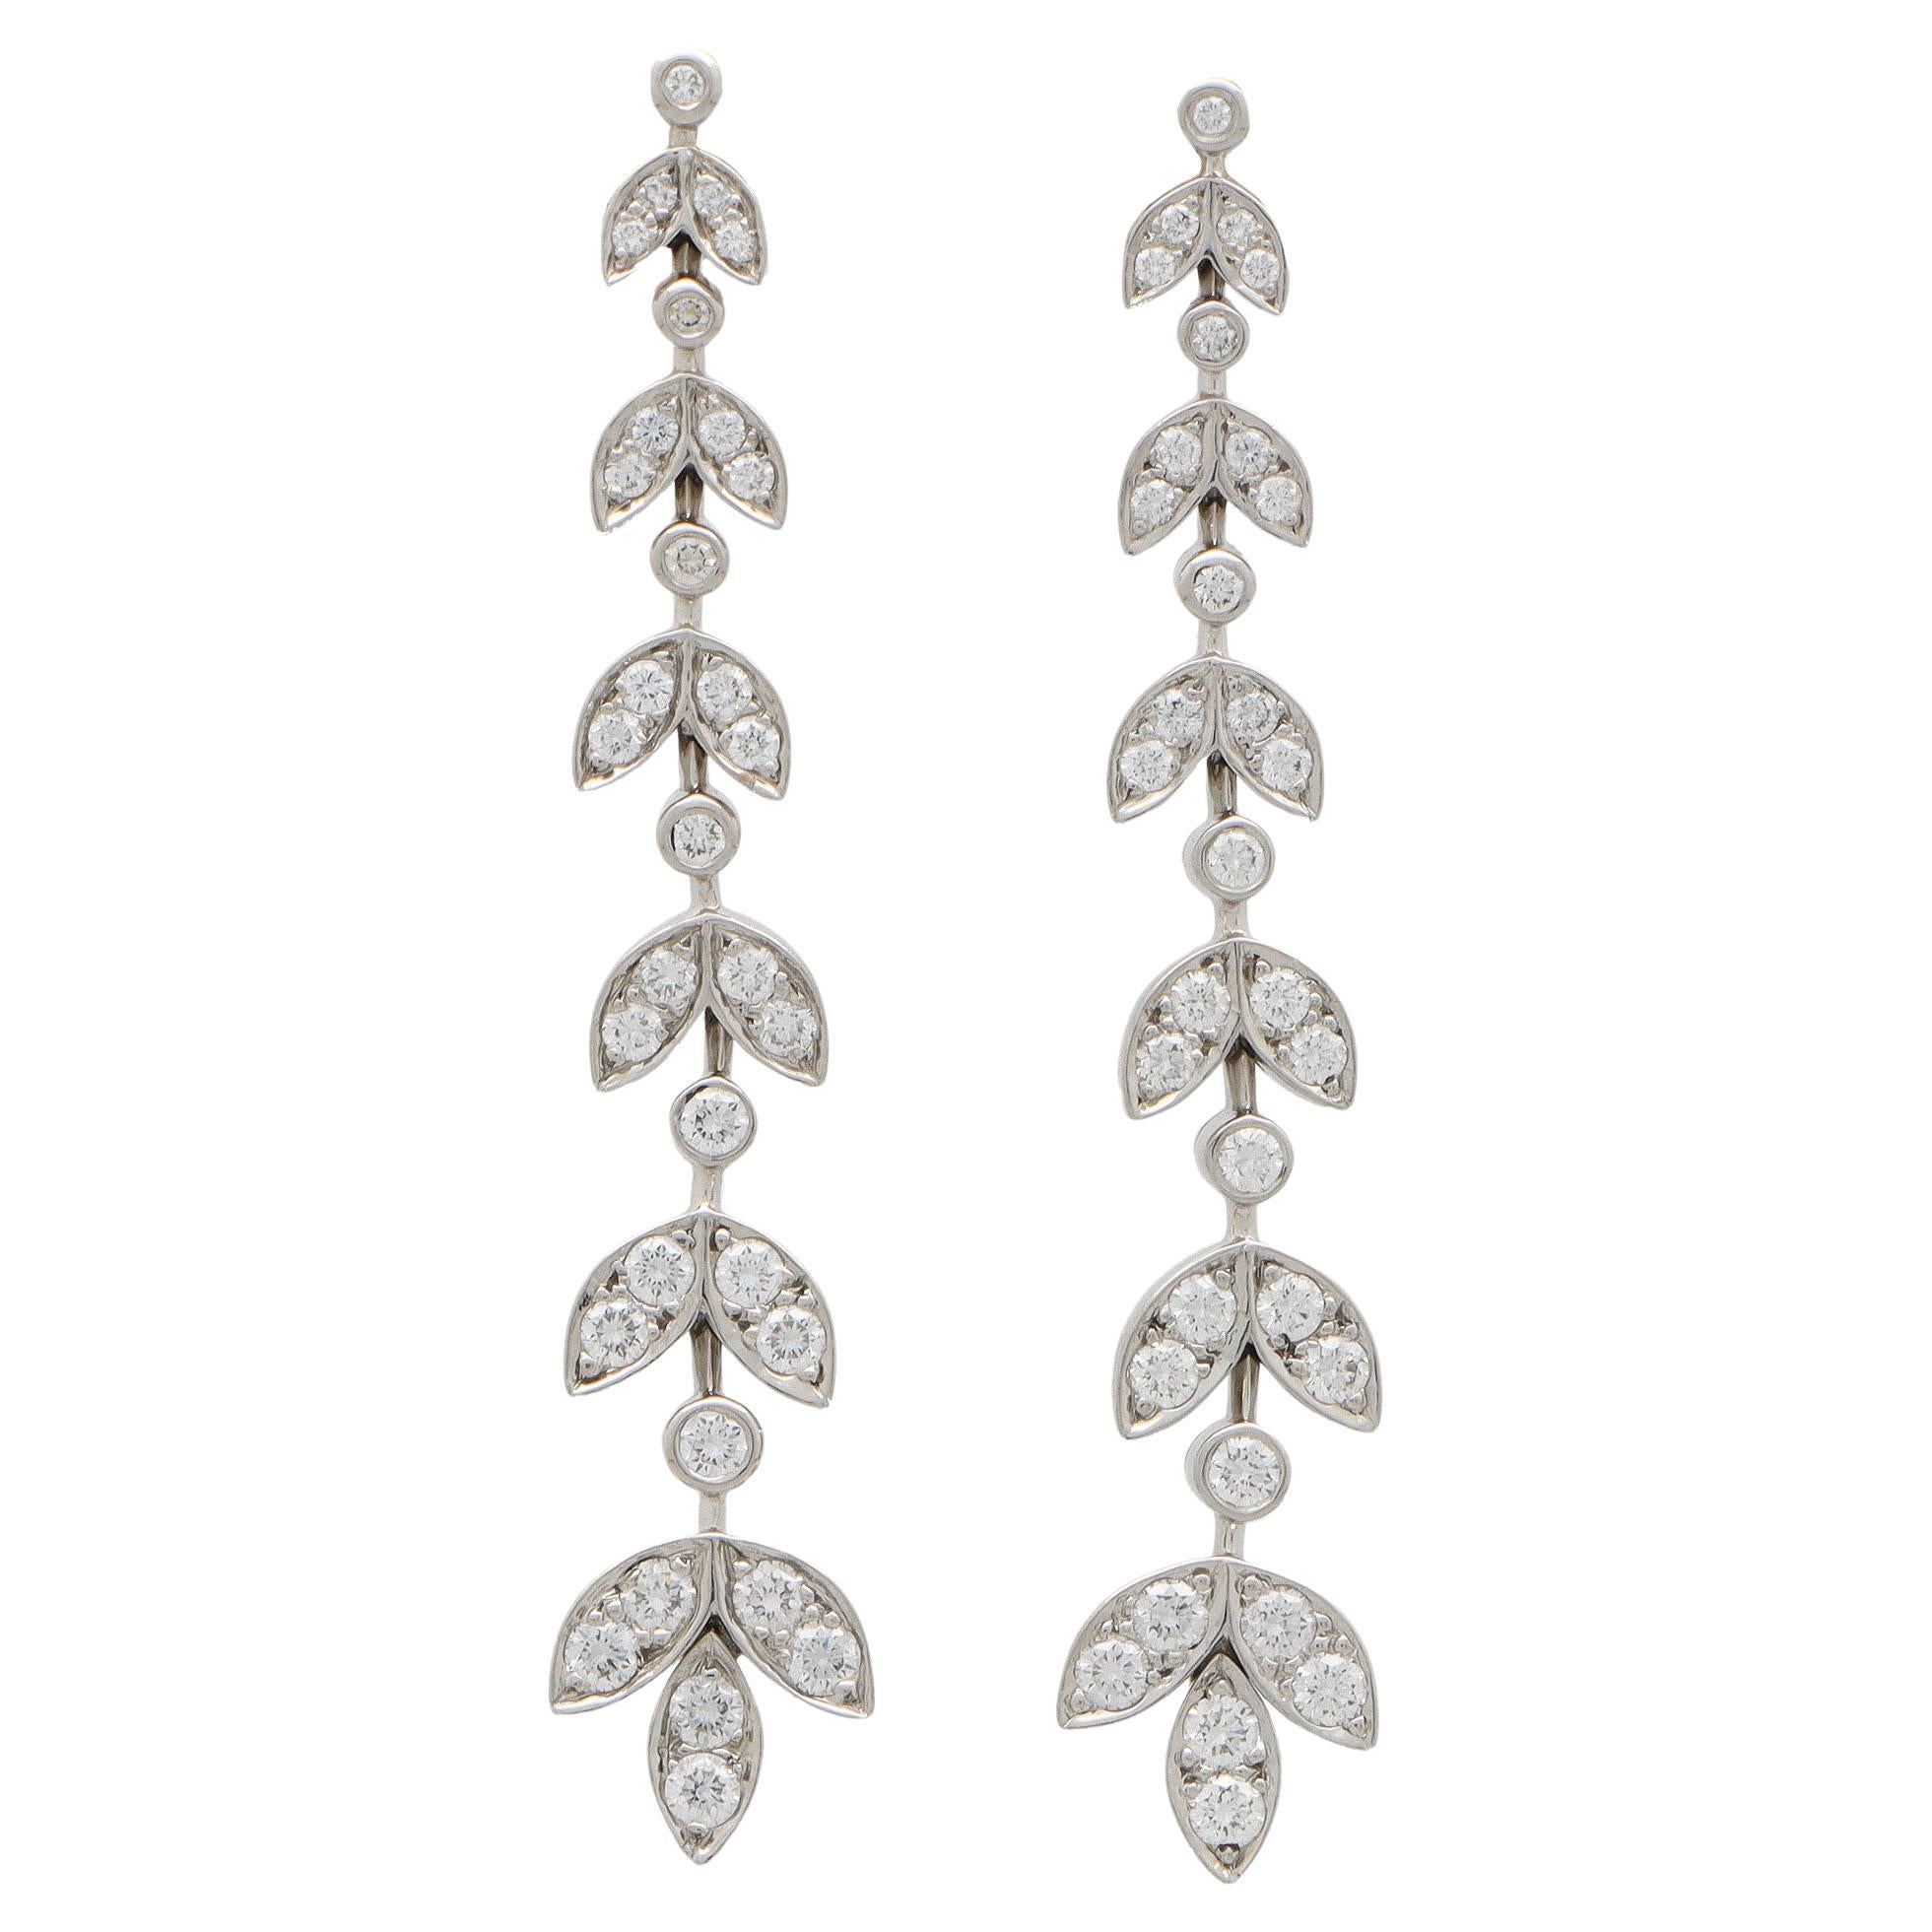 Vintage Tiffany & Co. Diamond Drop ‘Wisteria’ Earrings Set in Platinum